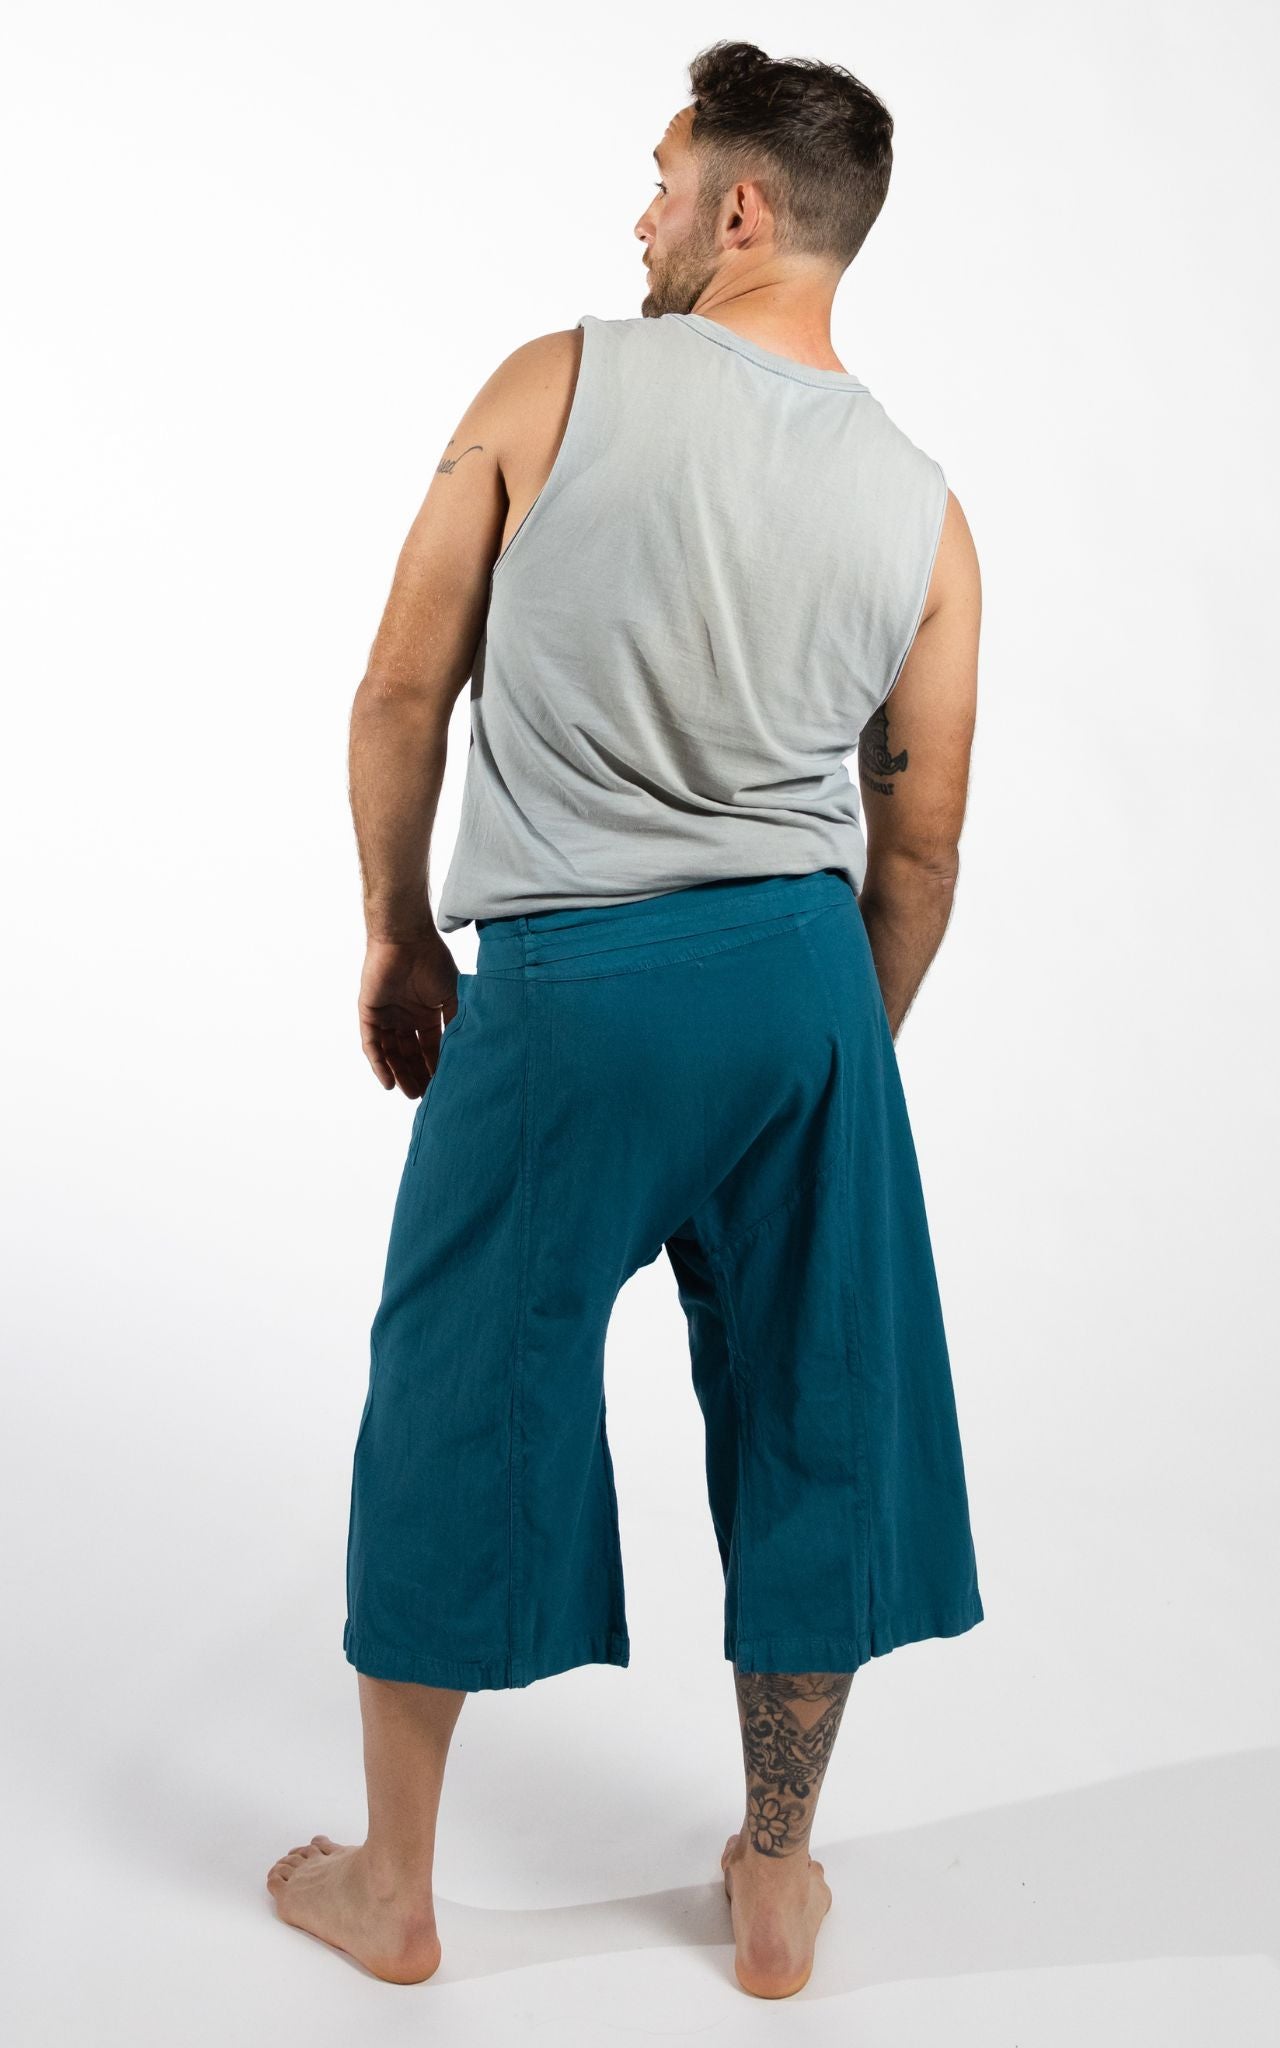 Surya Australia Ethical Cotton Thai Fisherman Shorts - Turquoise